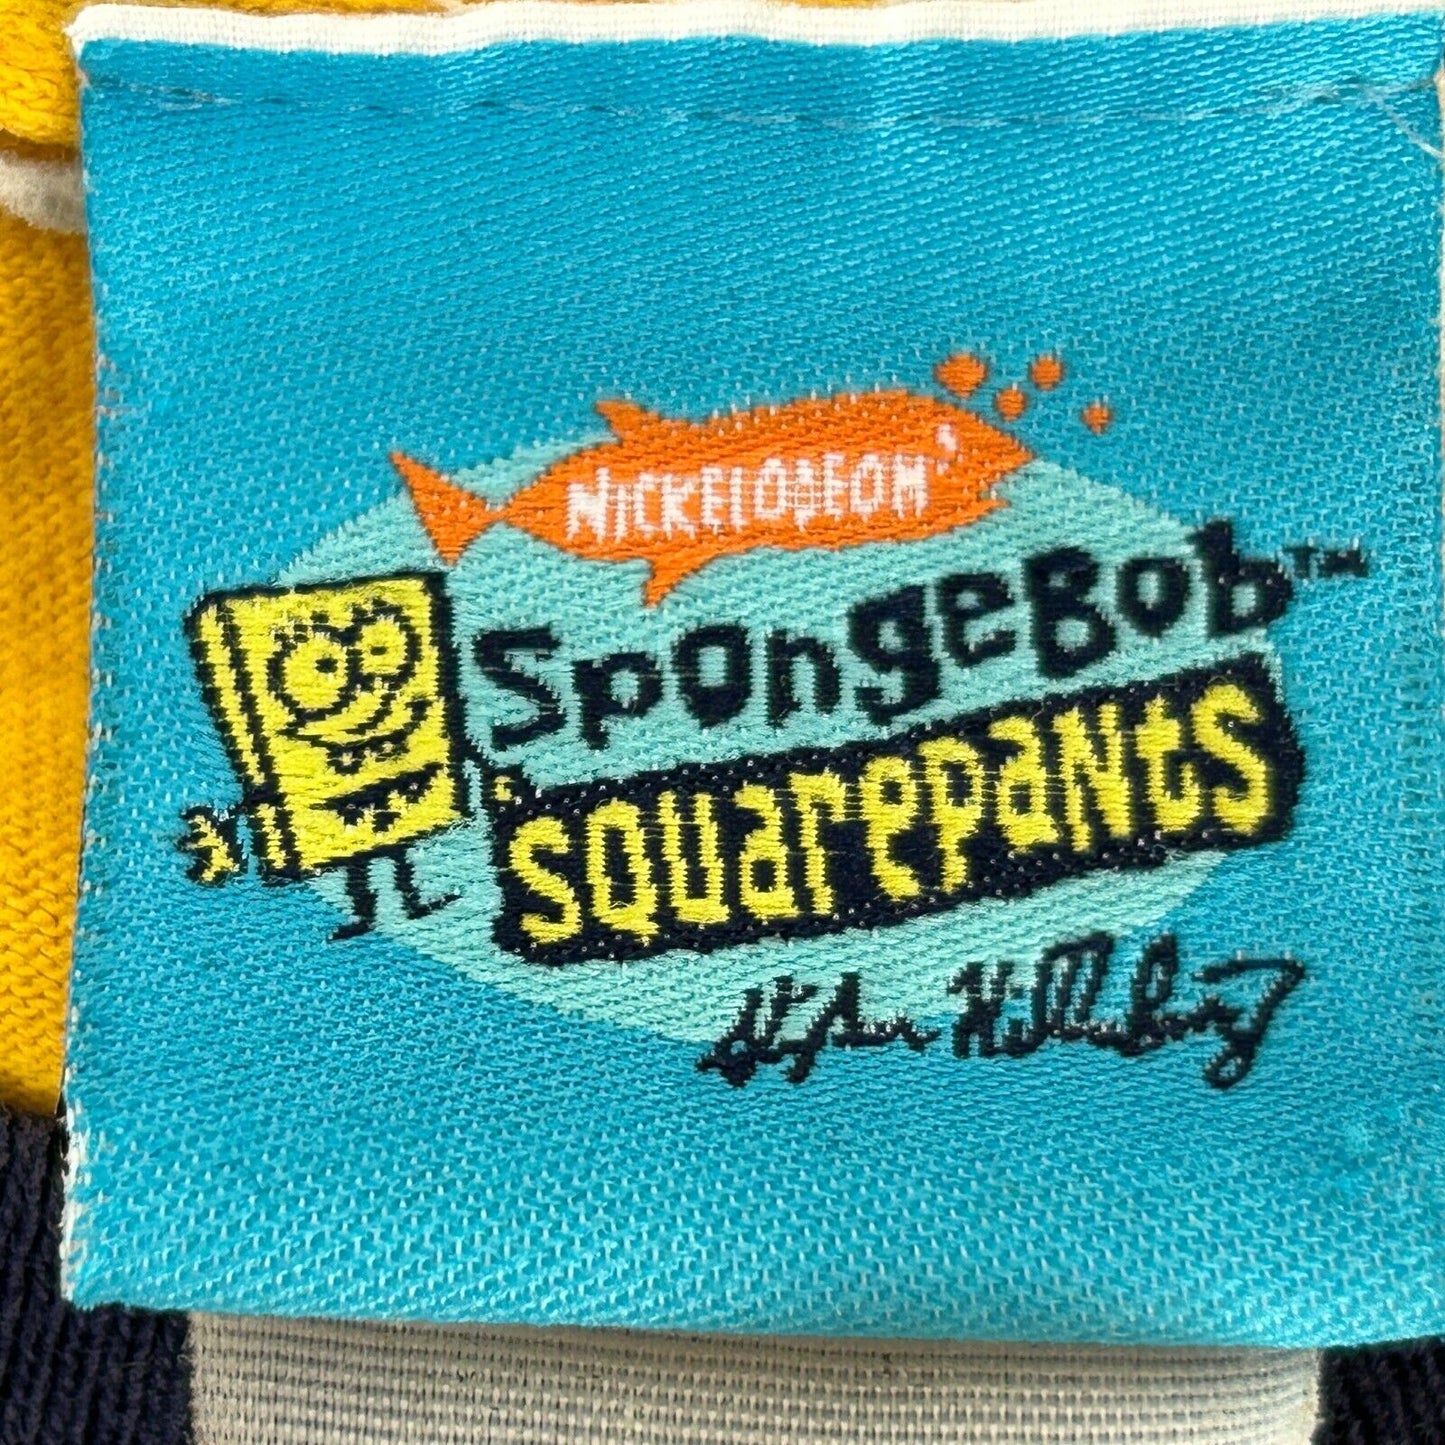 SpongeBob SquarePants Vintage Y2Ks Ringer T Shirt XXL Nickelodeon Mens Yellow